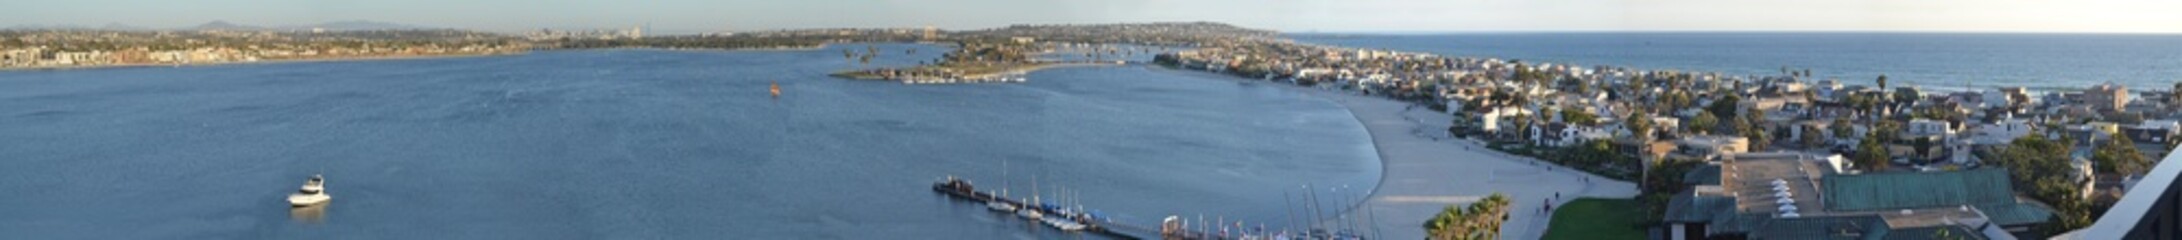 San Diego Mission Bay panorama